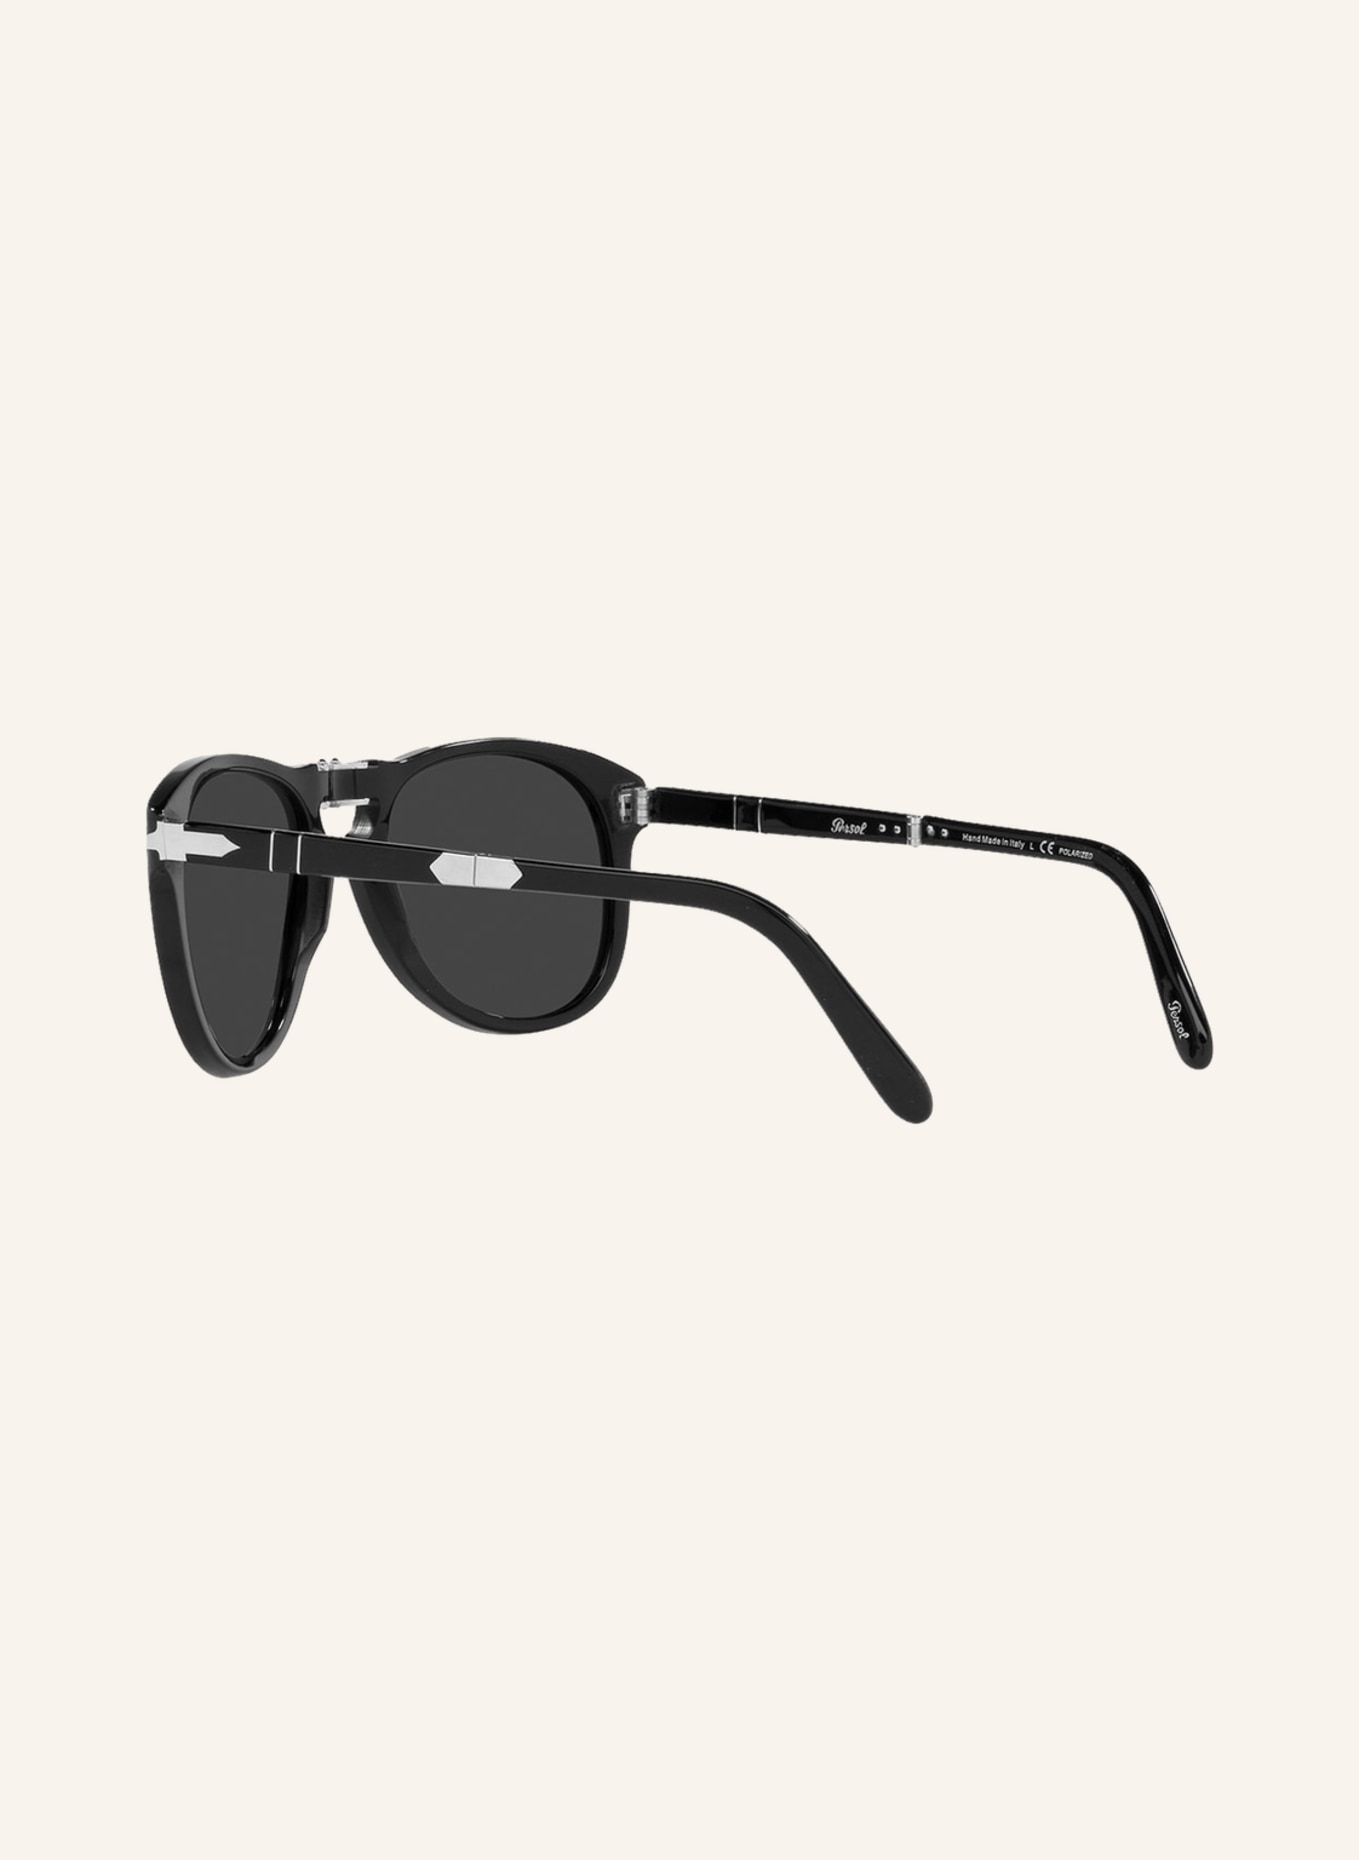 Persol Steve McQueen 714SM Classic Black Sunglasses | Uncrate Supply